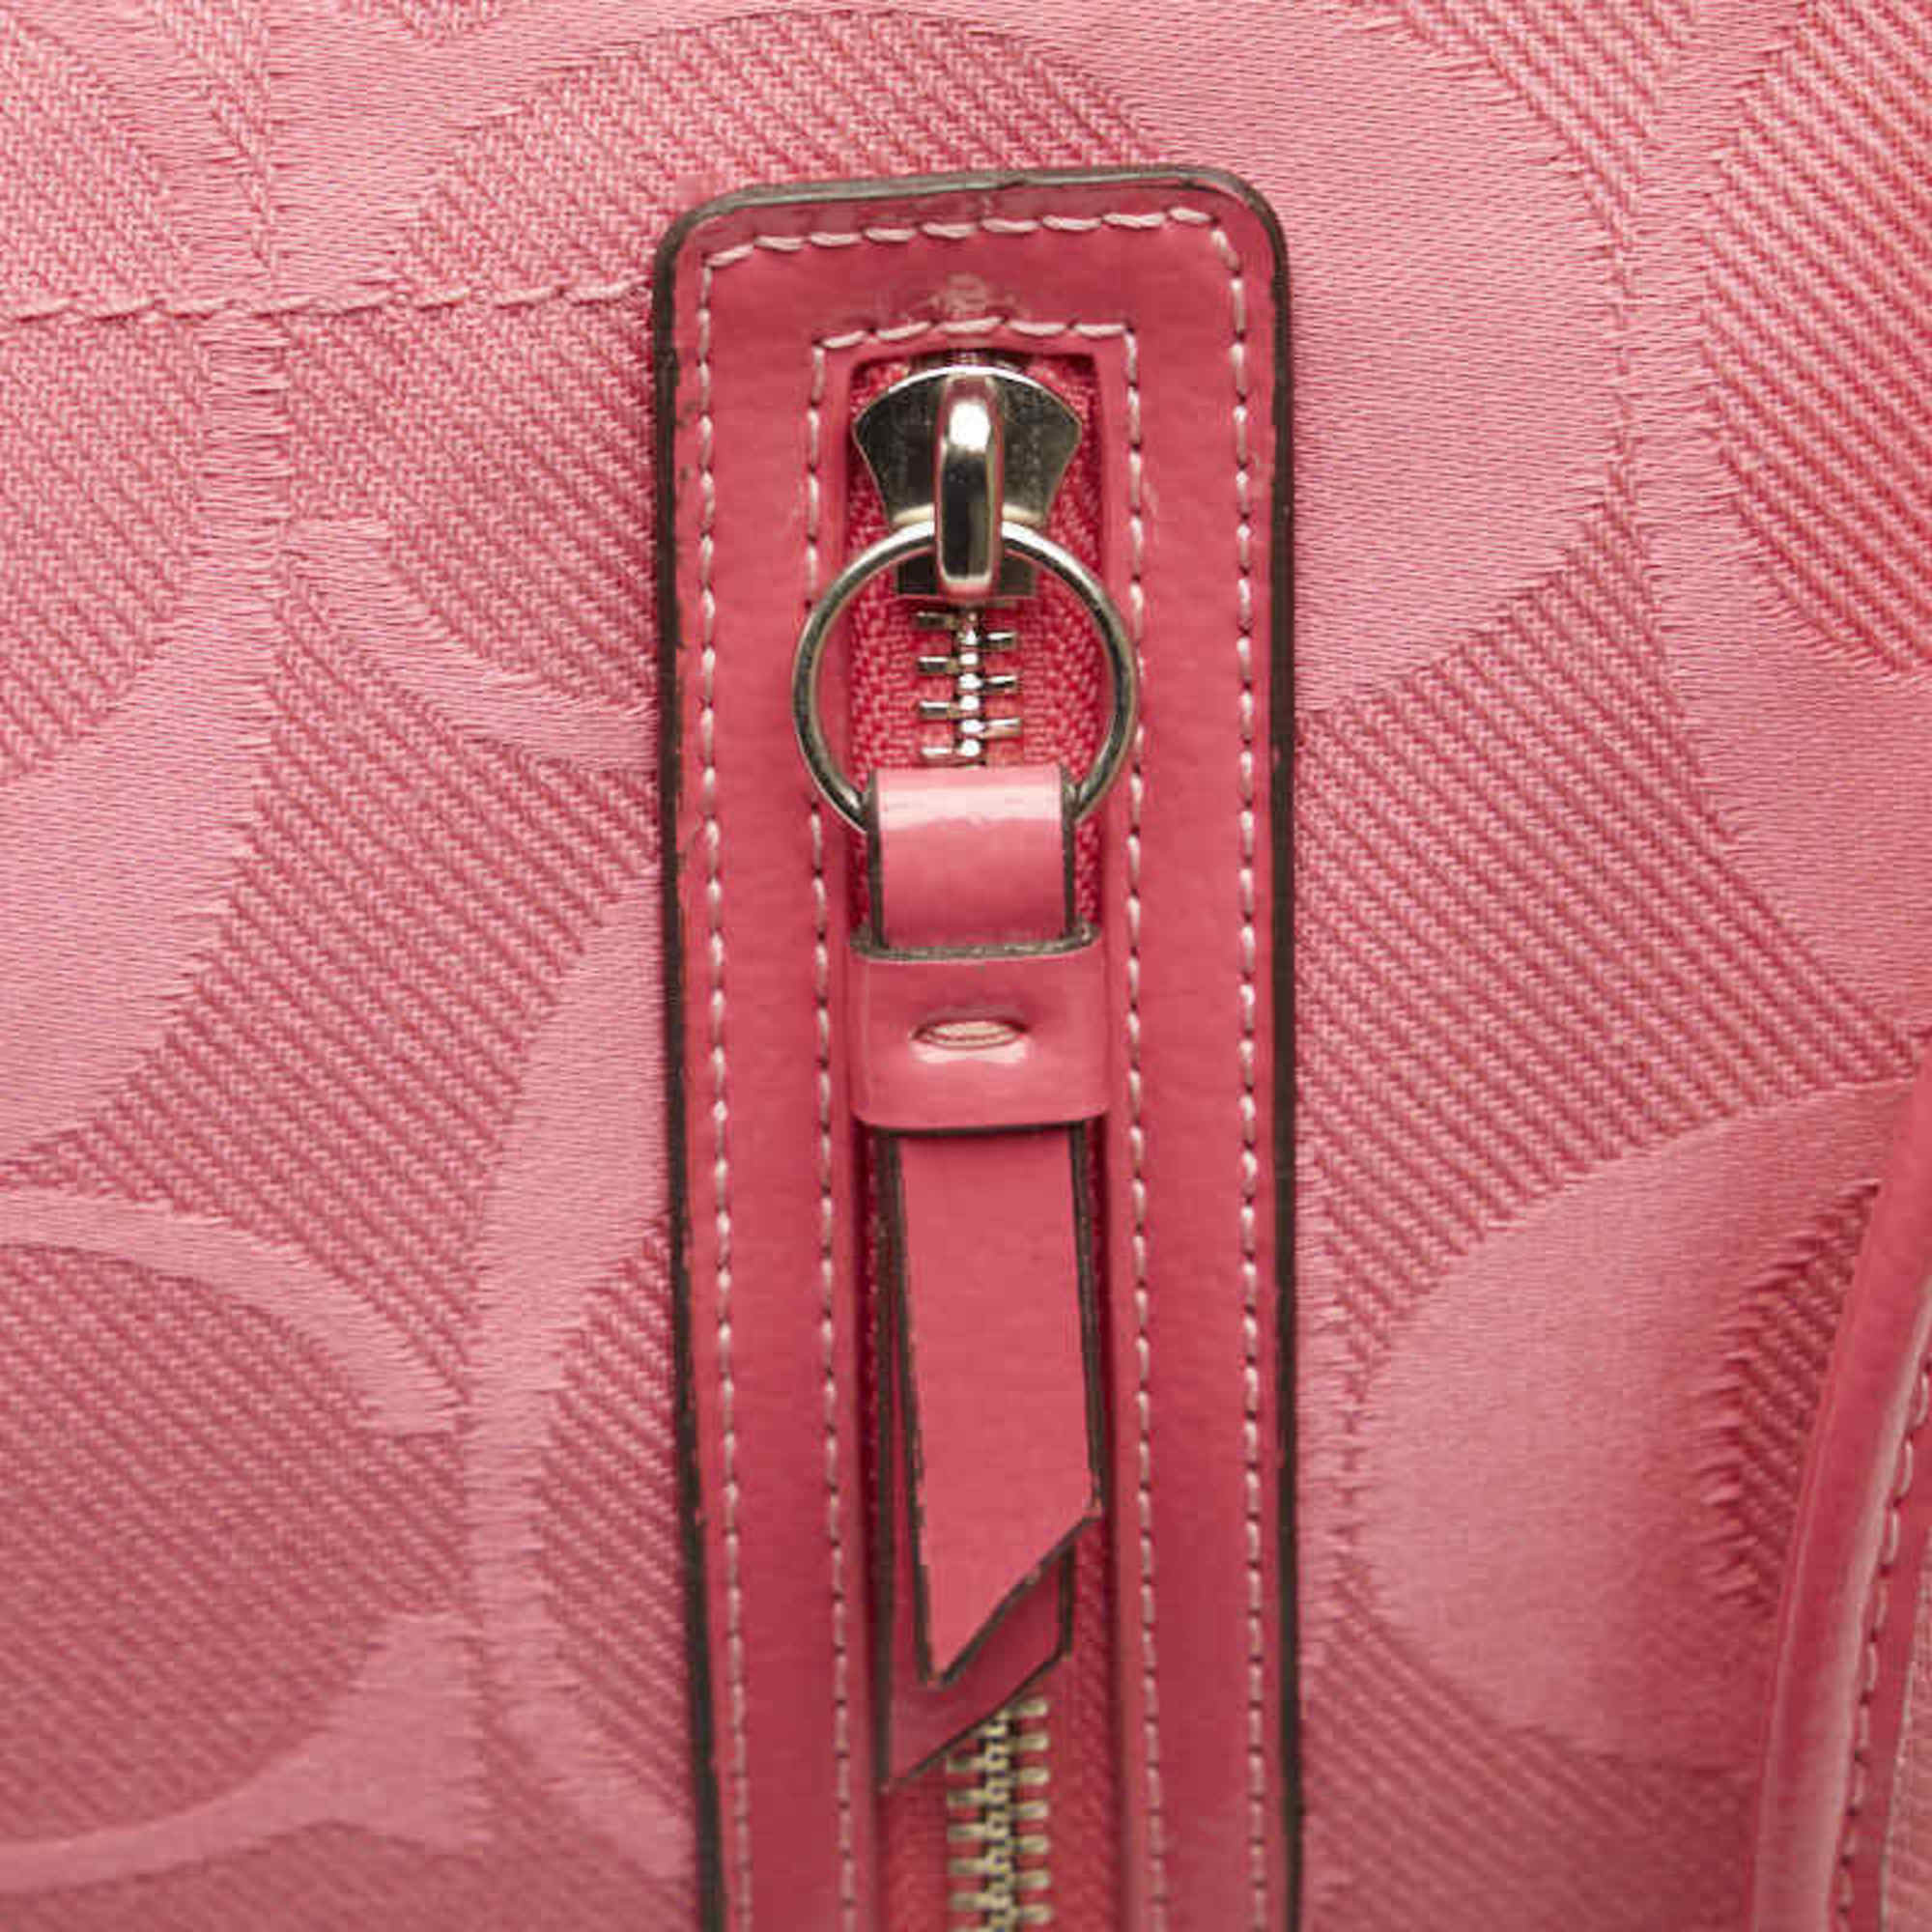 Coach Signature Backpack F16548 Pink Canvas Enamel Women's COACH